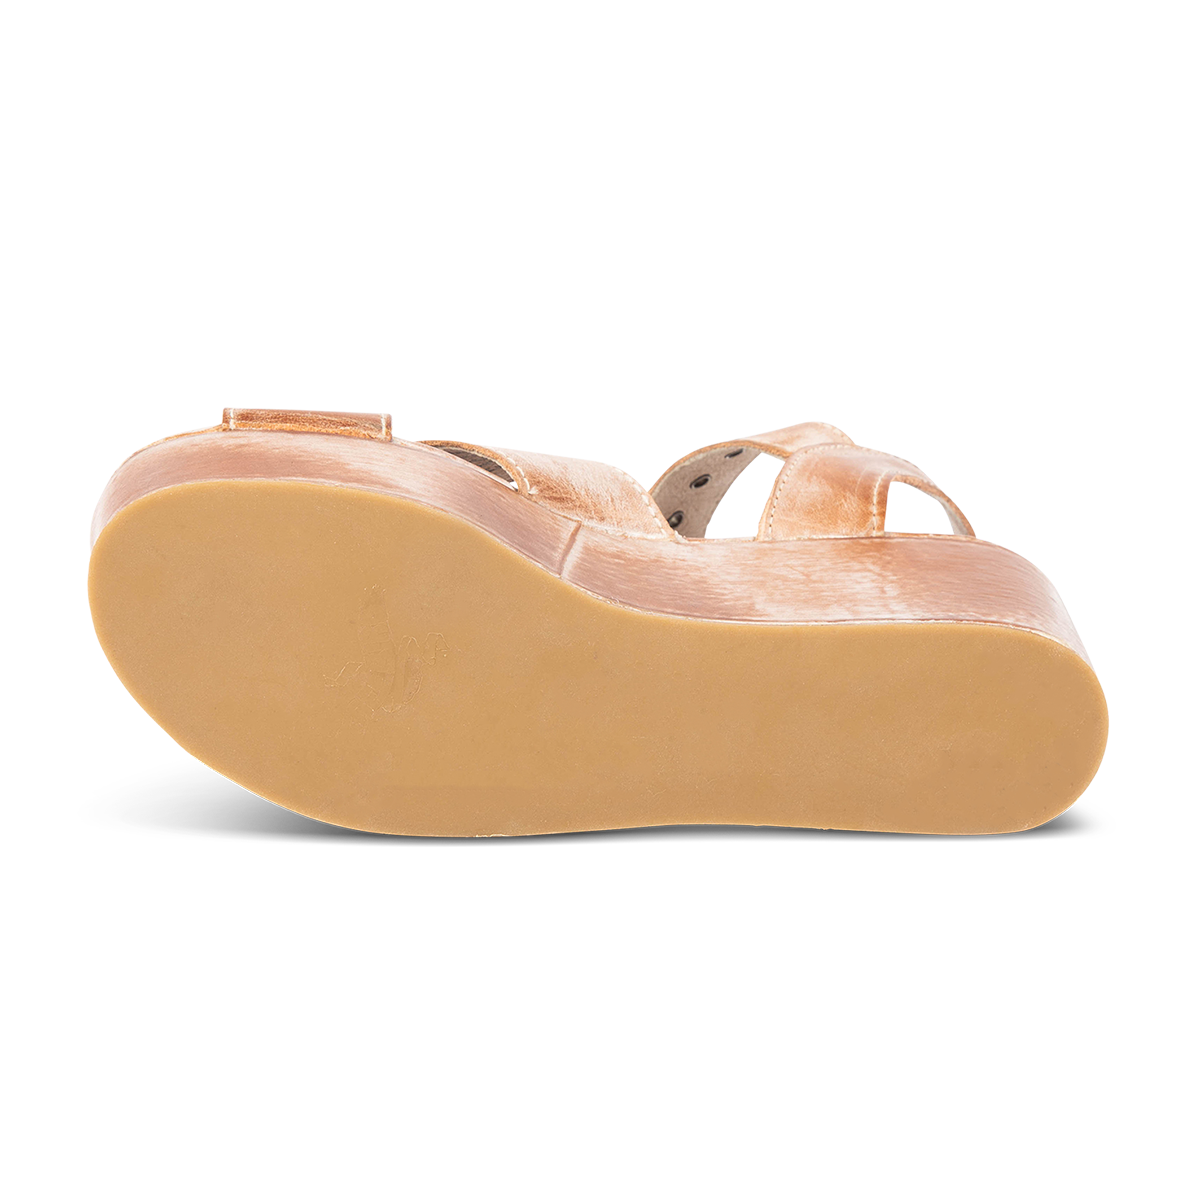 Rubber sole imprinted with FREEBIRD on women's Larae taupe platform sandal